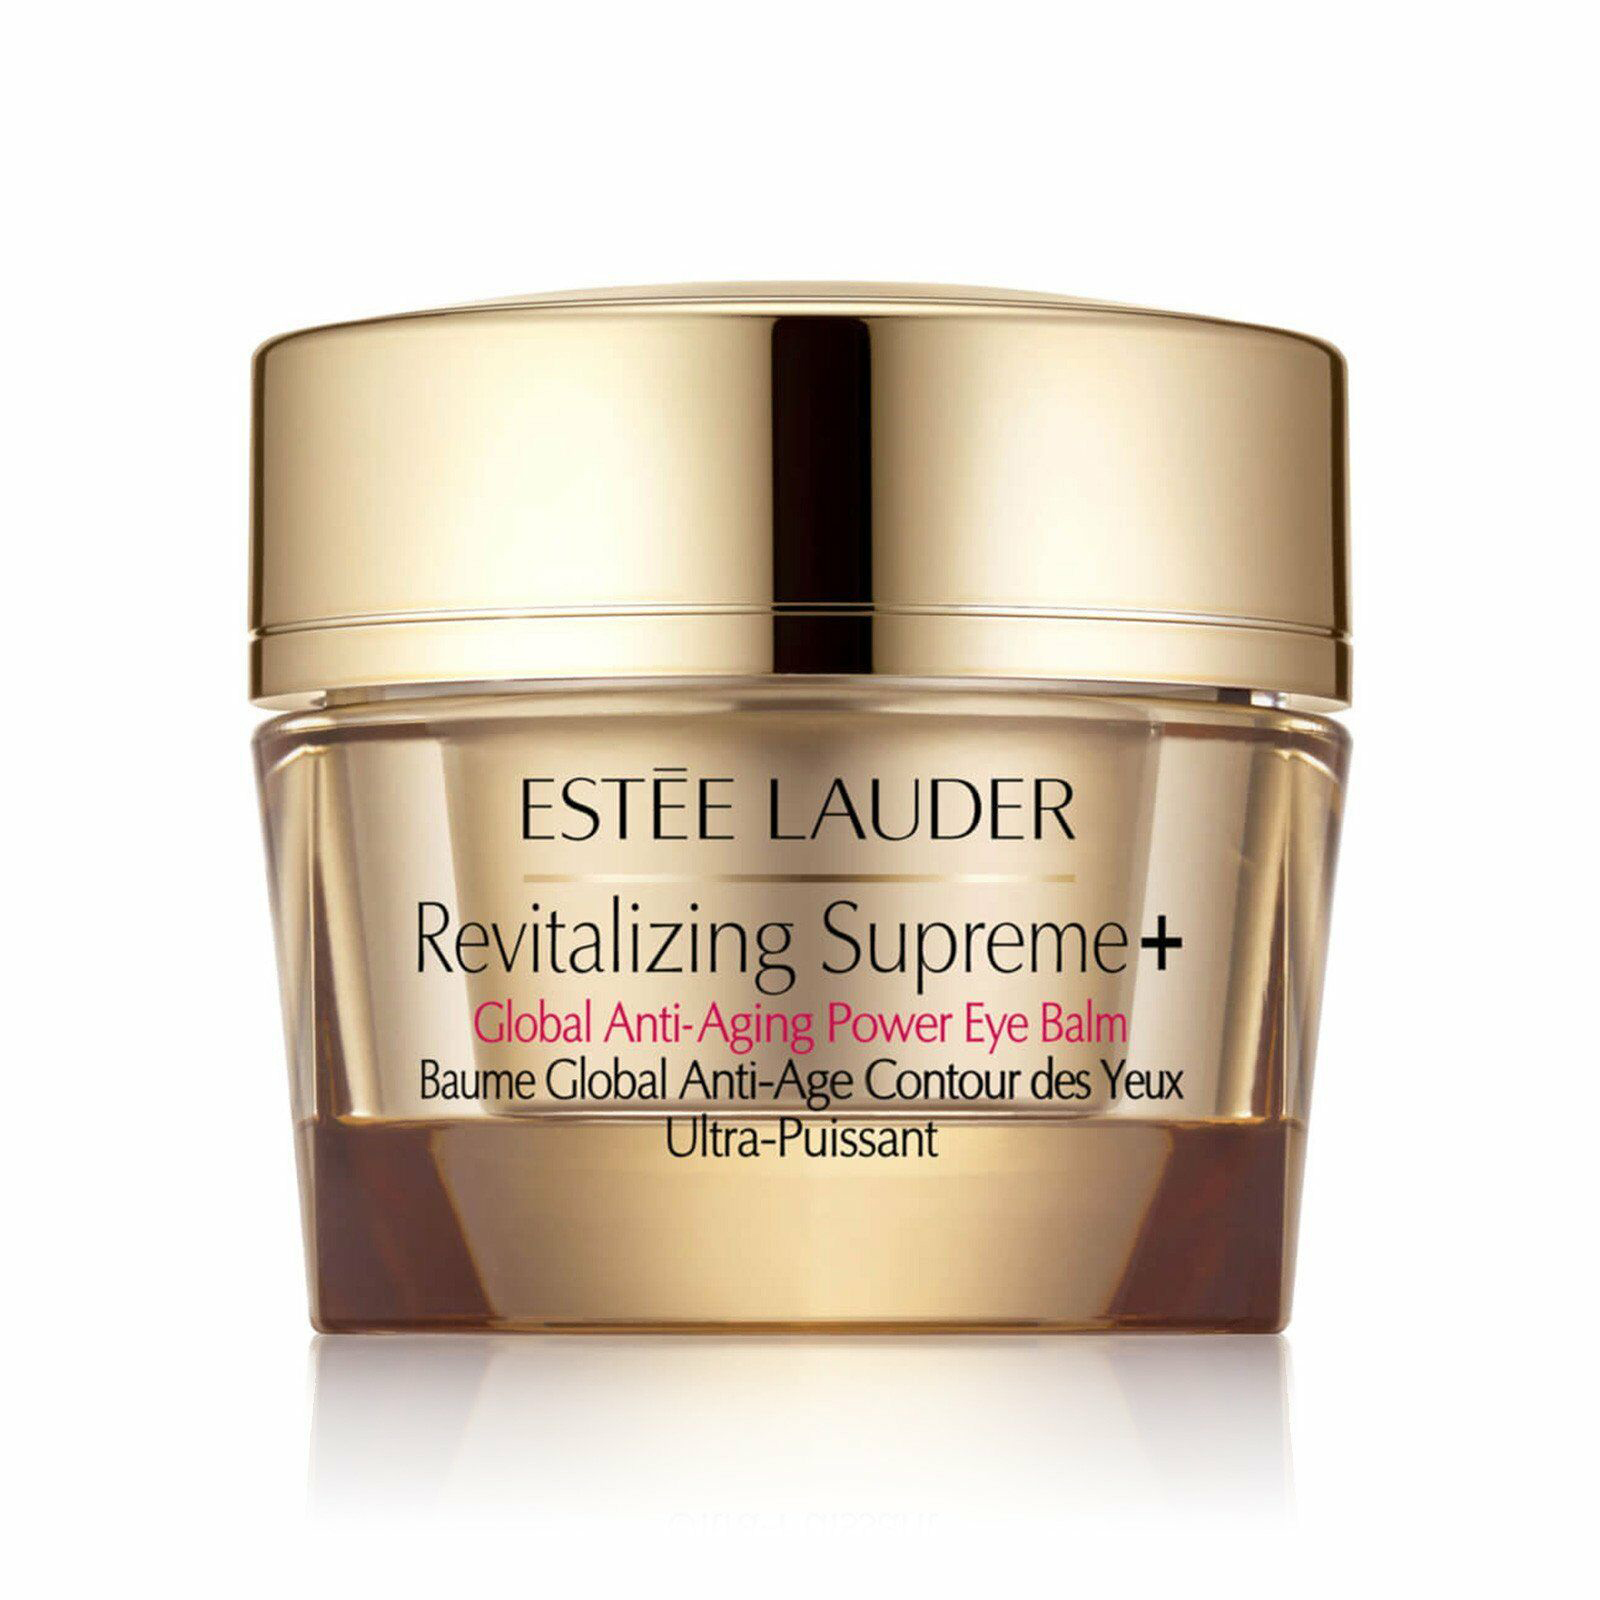 Estee Lauder 0.5oz. Revitalizing Supreme+ Global Anti-Aging Cell Power Eye Balm